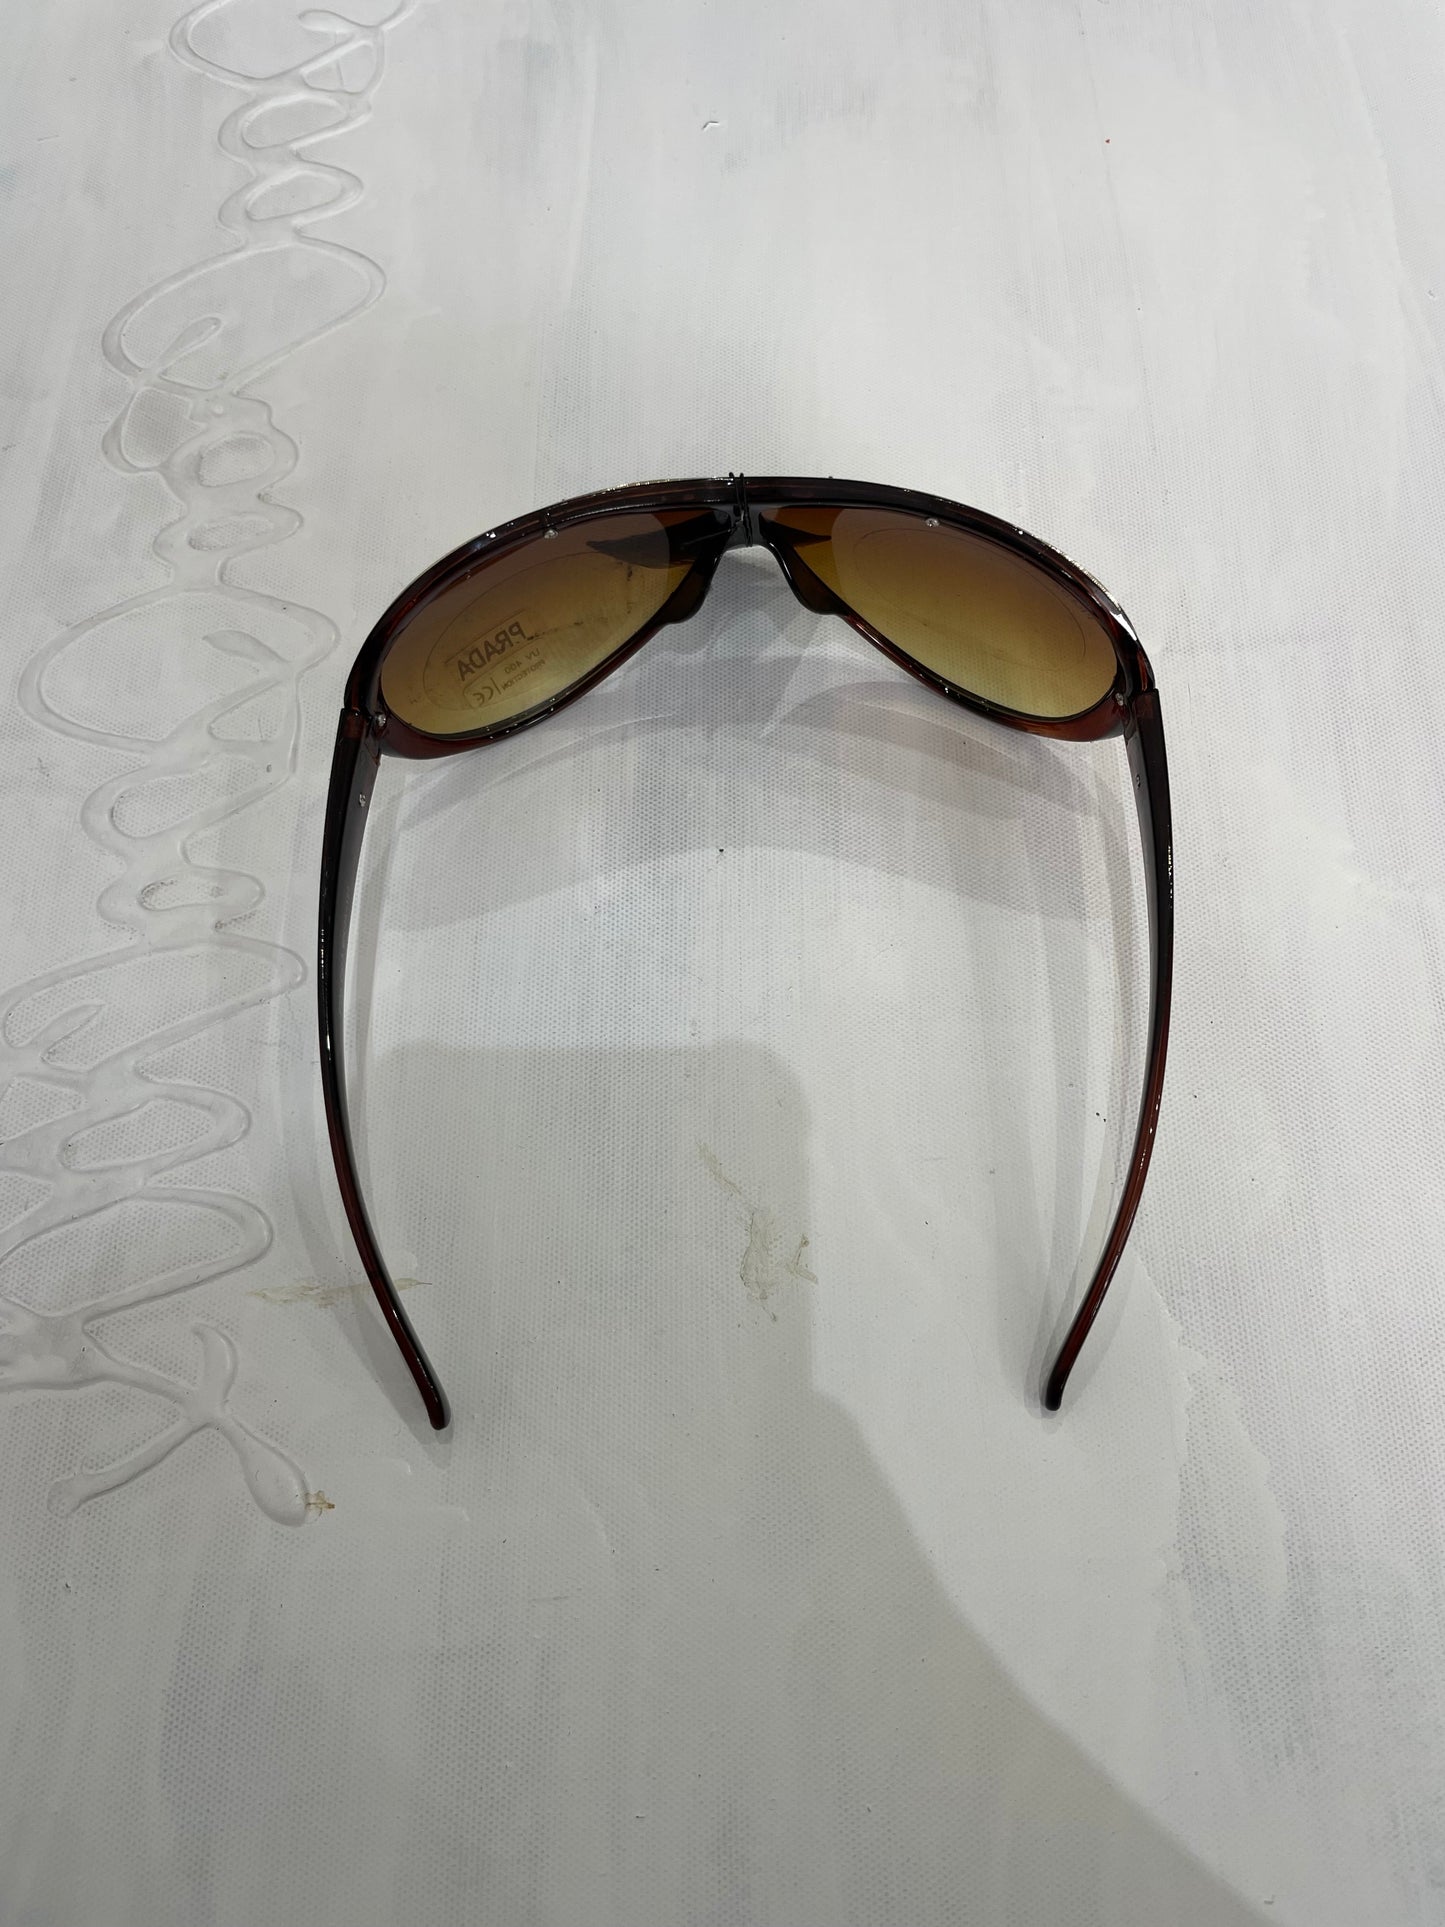 ADDISON RAE DROP | brown prada style shield sunglasses